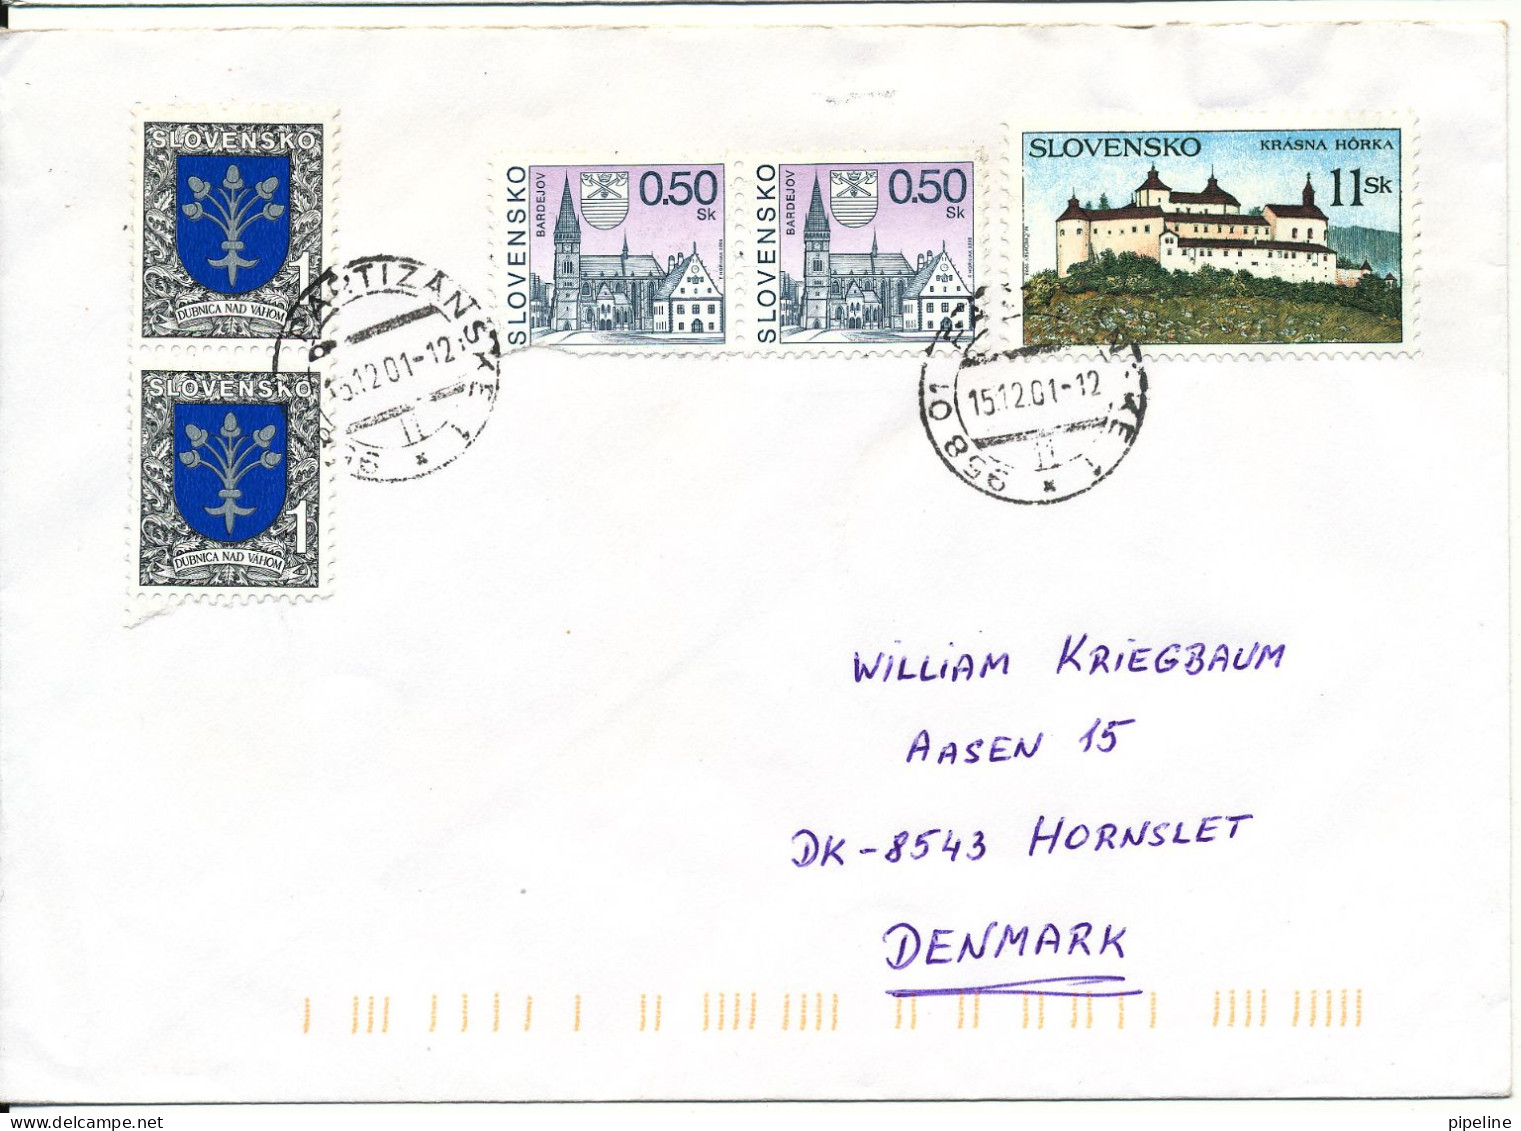 Slovakia Nice Cover Sent To Denmark 15-12-2001 - Storia Postale